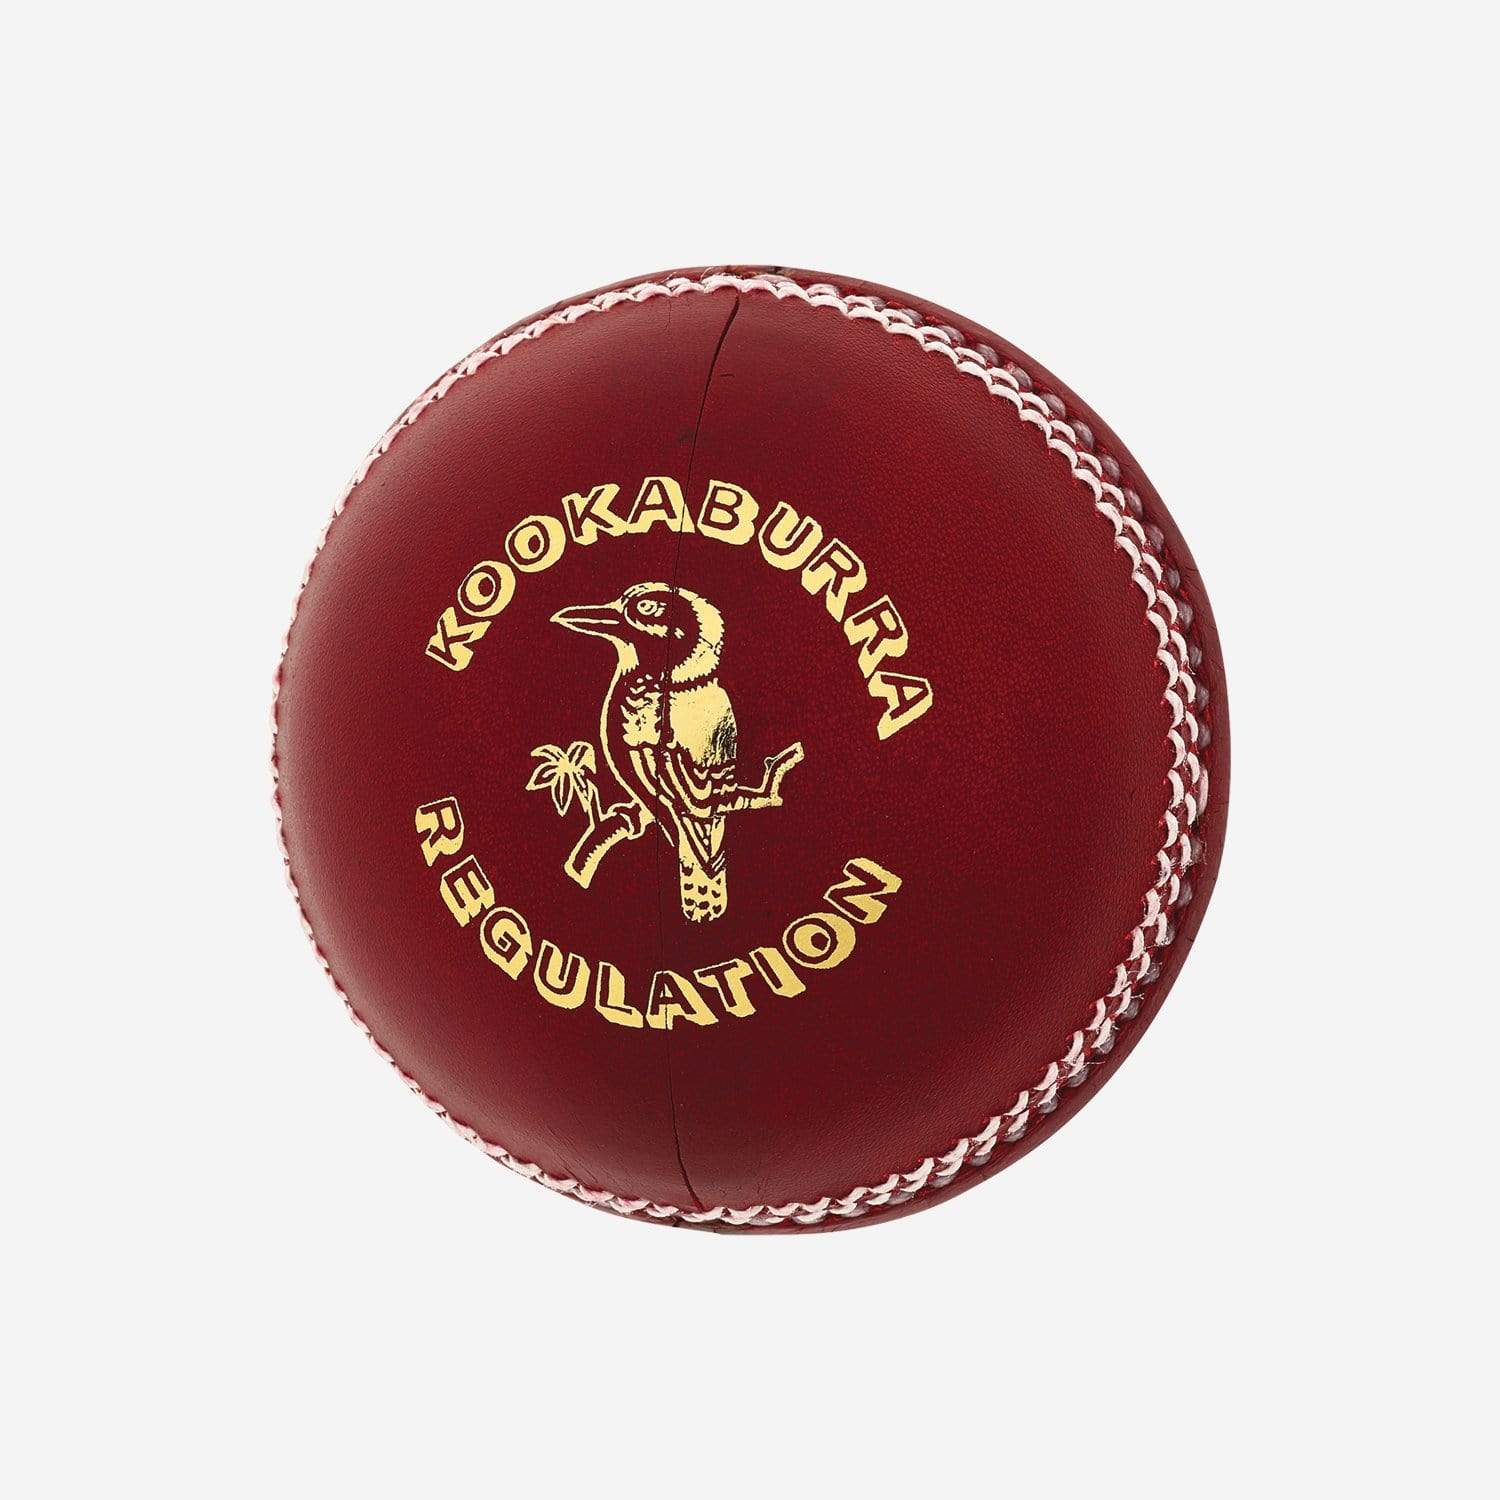 Kookaburra Cricket Balls Kookaburra Regulation 4 Piece Leather Cricket Balls Red 156G